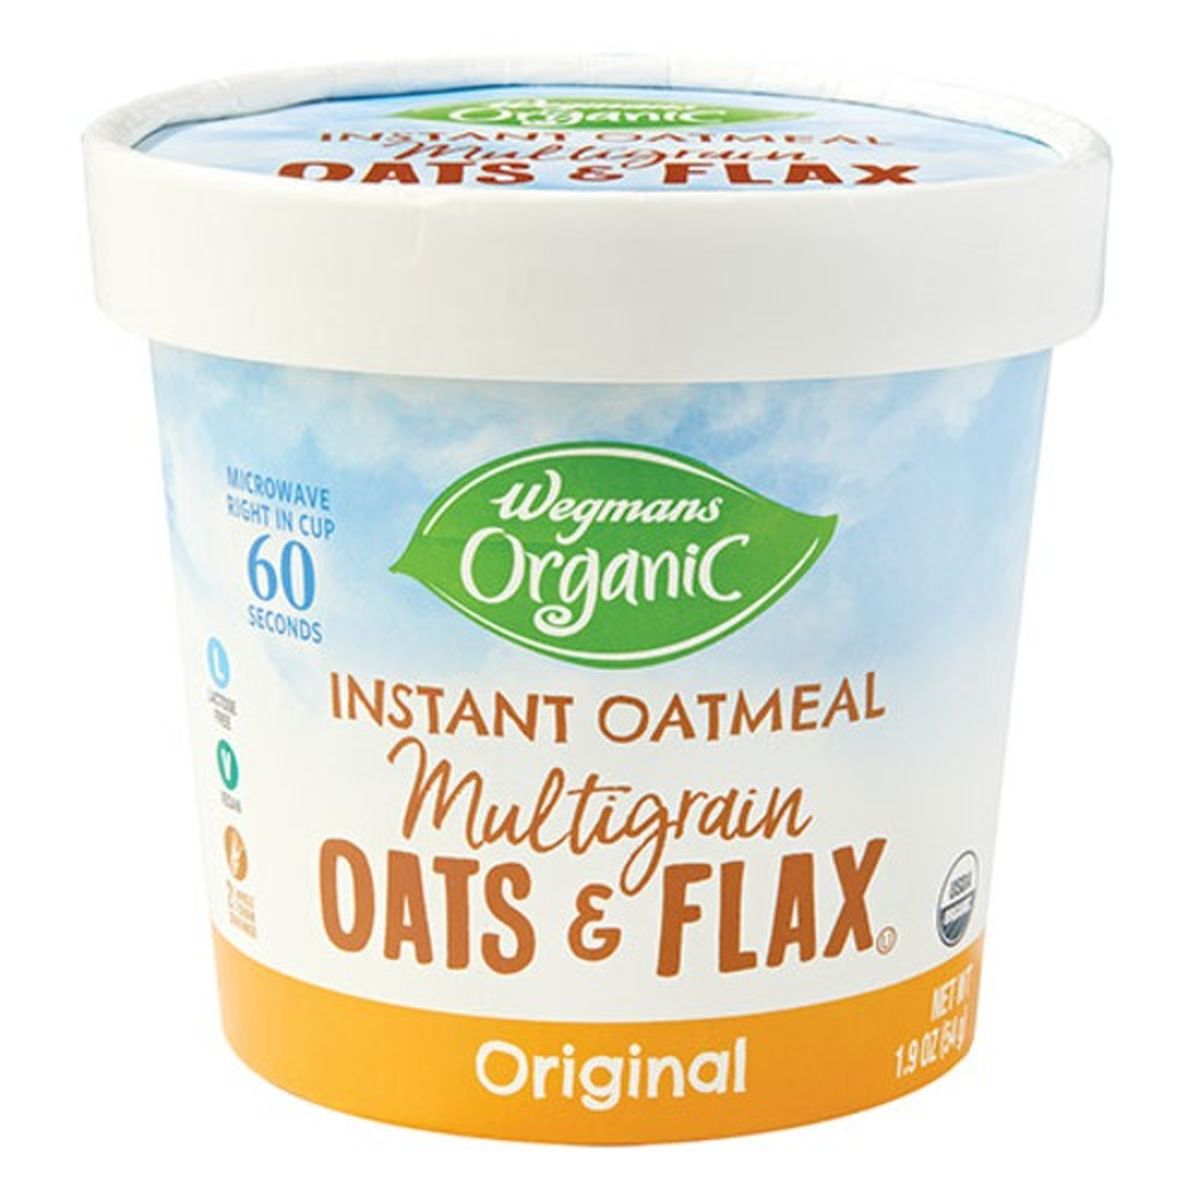 Calories in Wegmans Organic Original Oats & Flax Instant Oatmeal